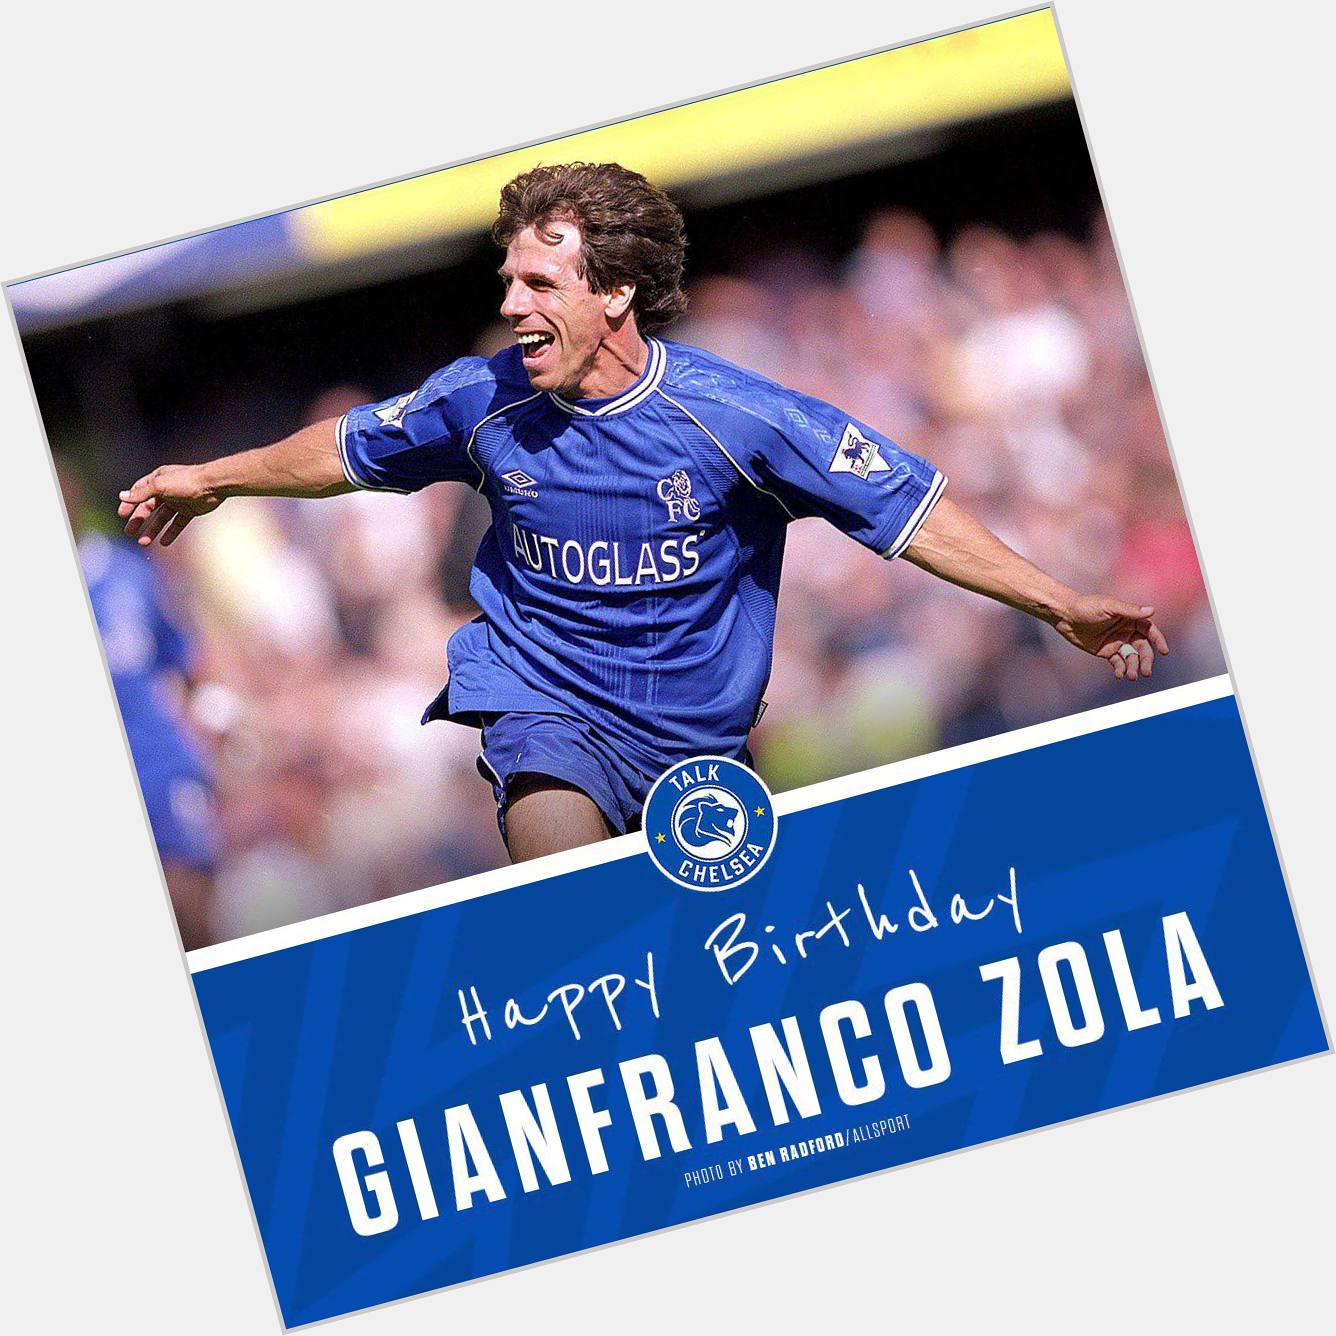 Happy Birthday to Chelsea legend, Gianfranco Zola! 